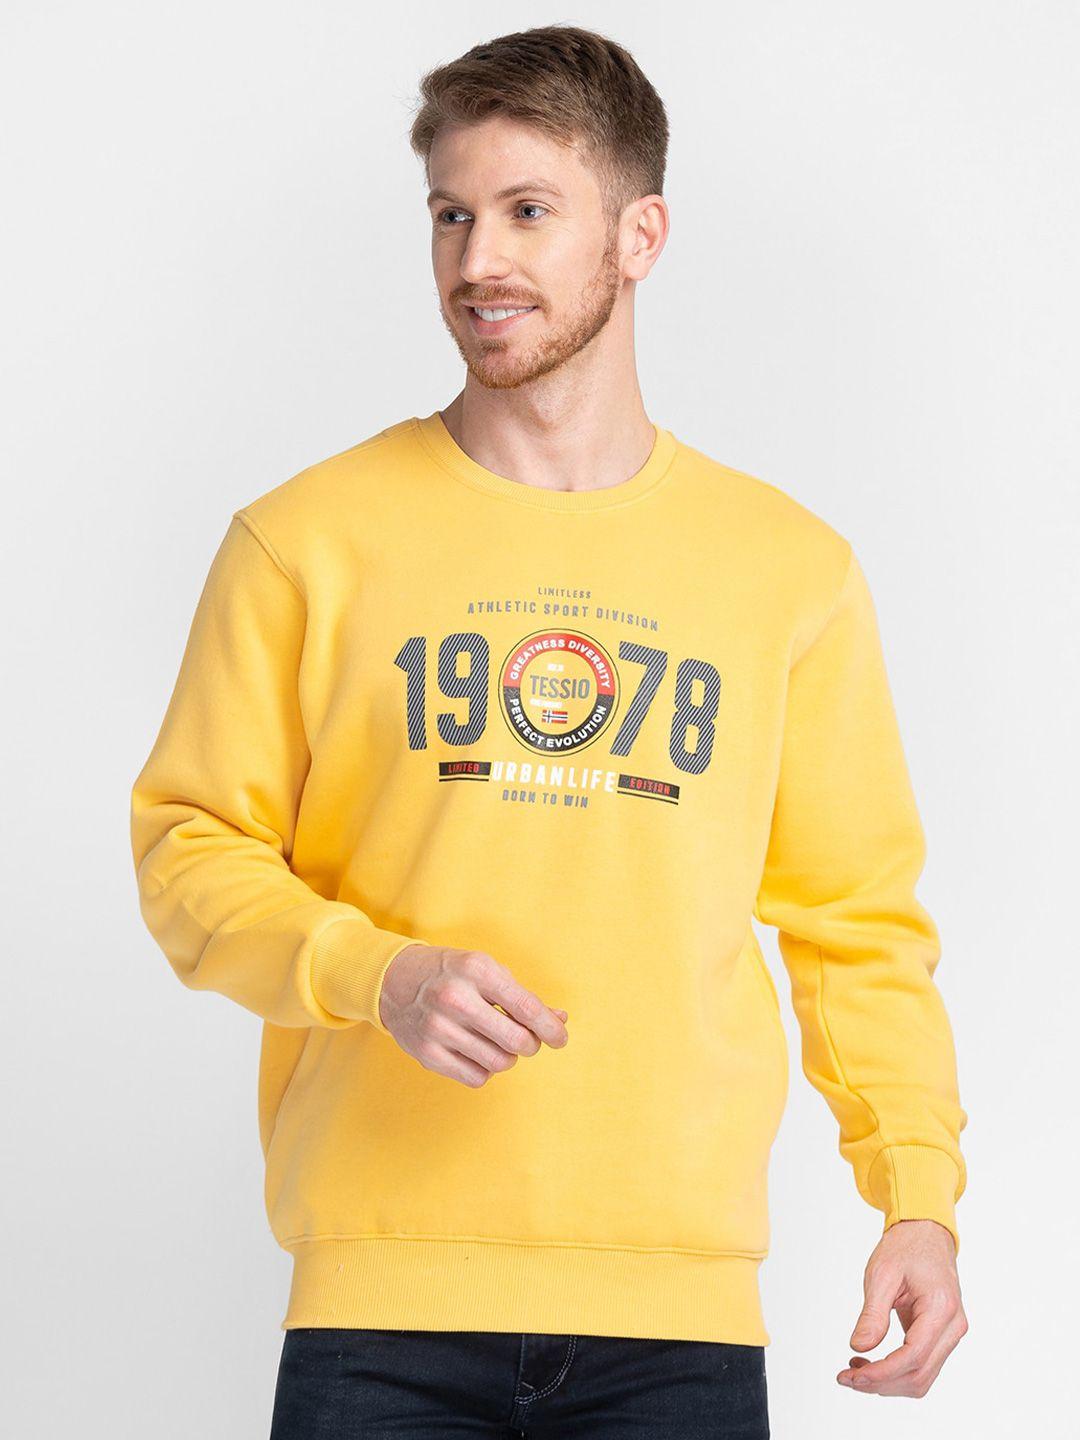 TESSIO Men Yellow Printed Sweatshirt